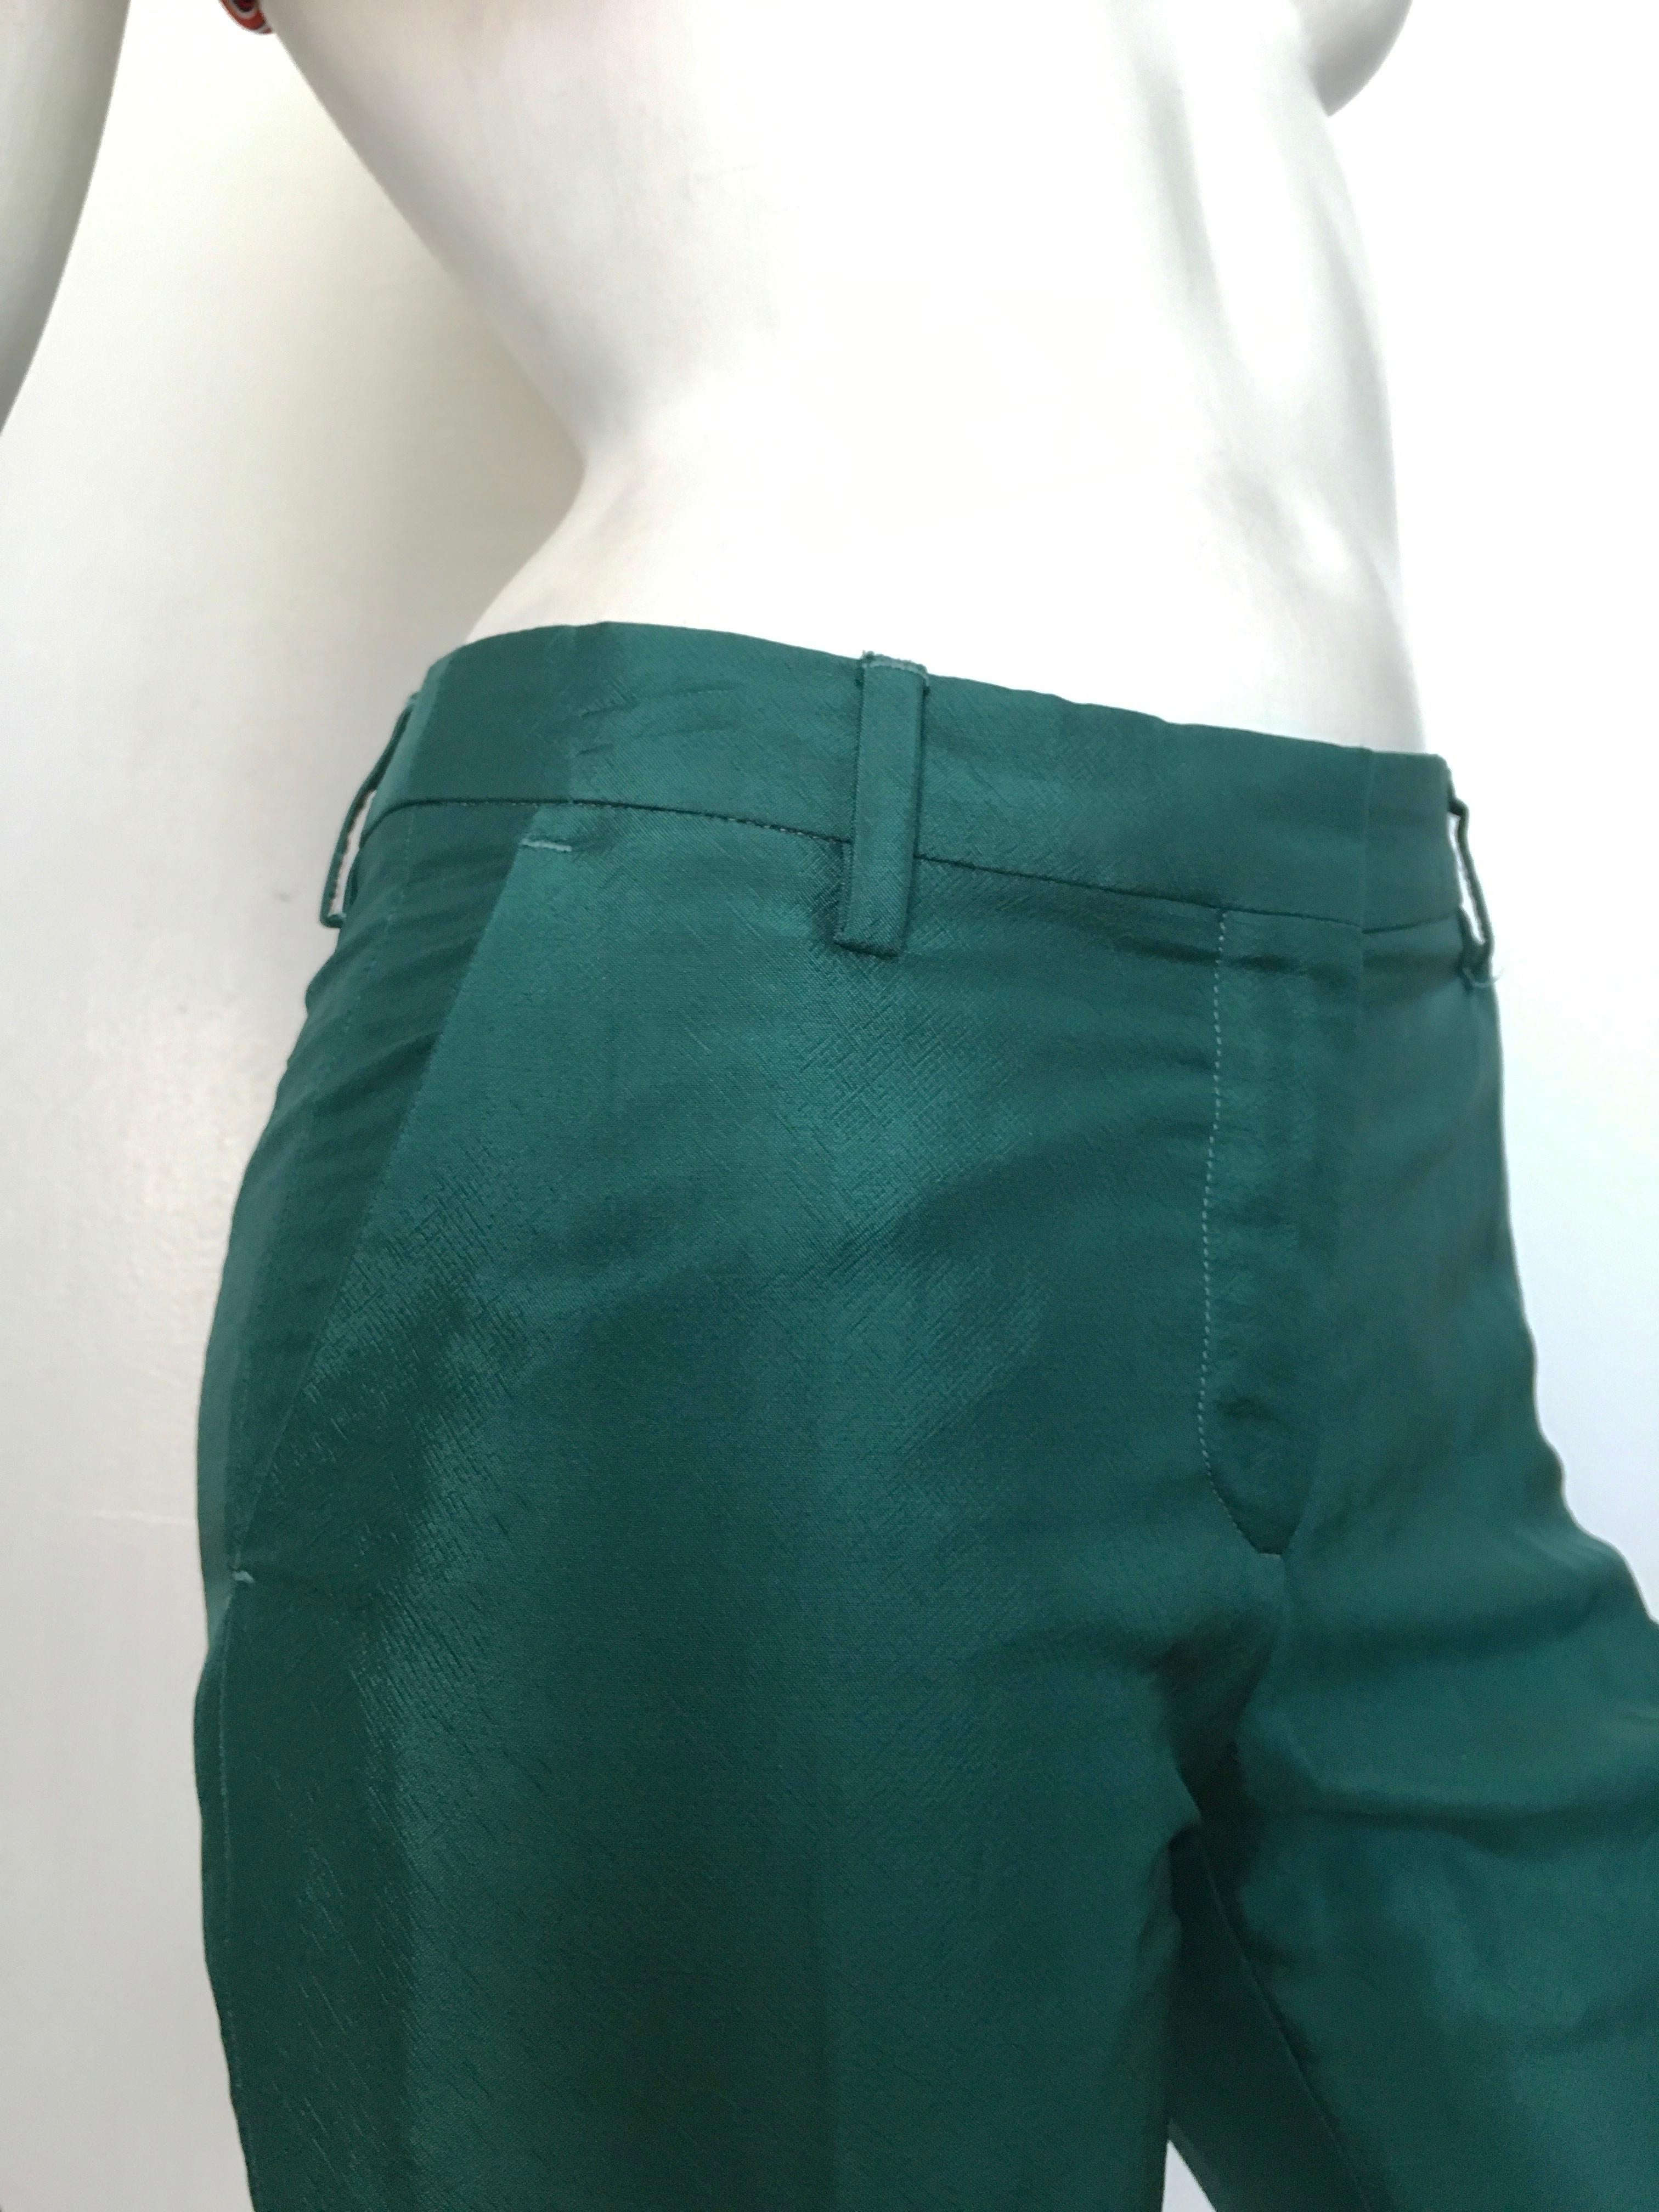 Women's or Men's Dries Van Noten Green Dress Pants with Pockets Size 4 / 34. For Sale